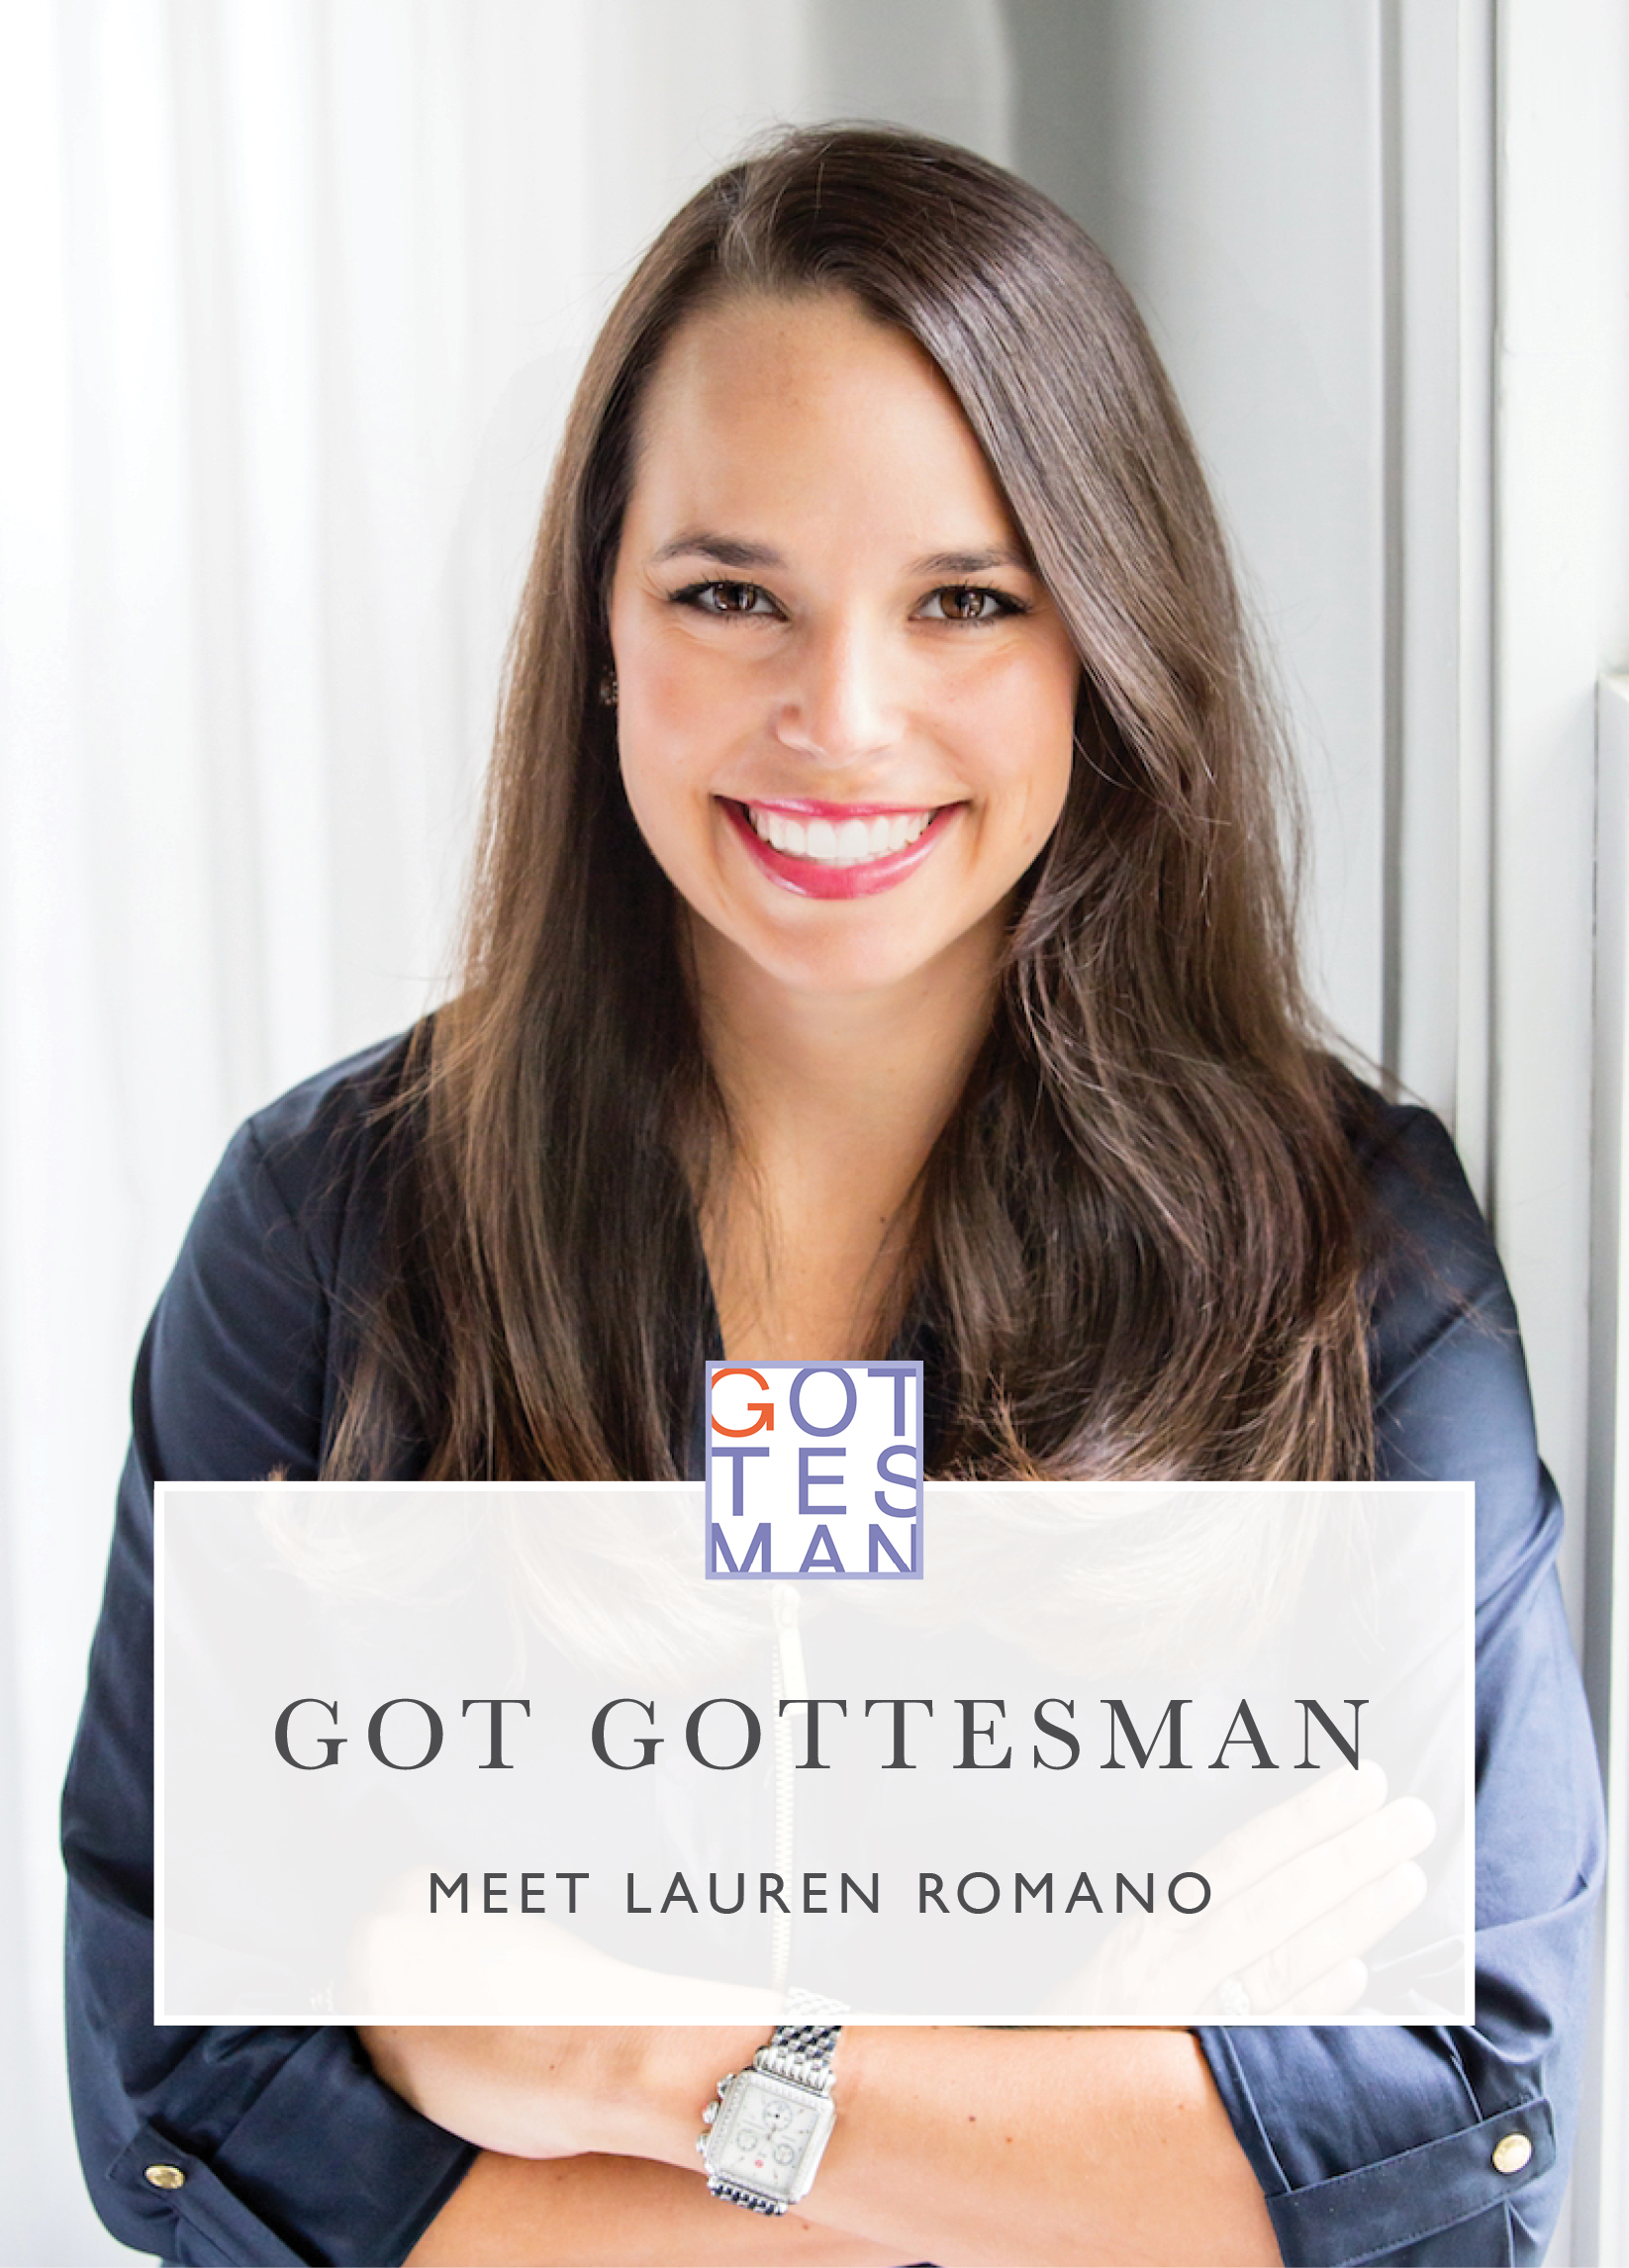 Headshot with text overlay, "Got Gottesman: Meet Lauren Romano"